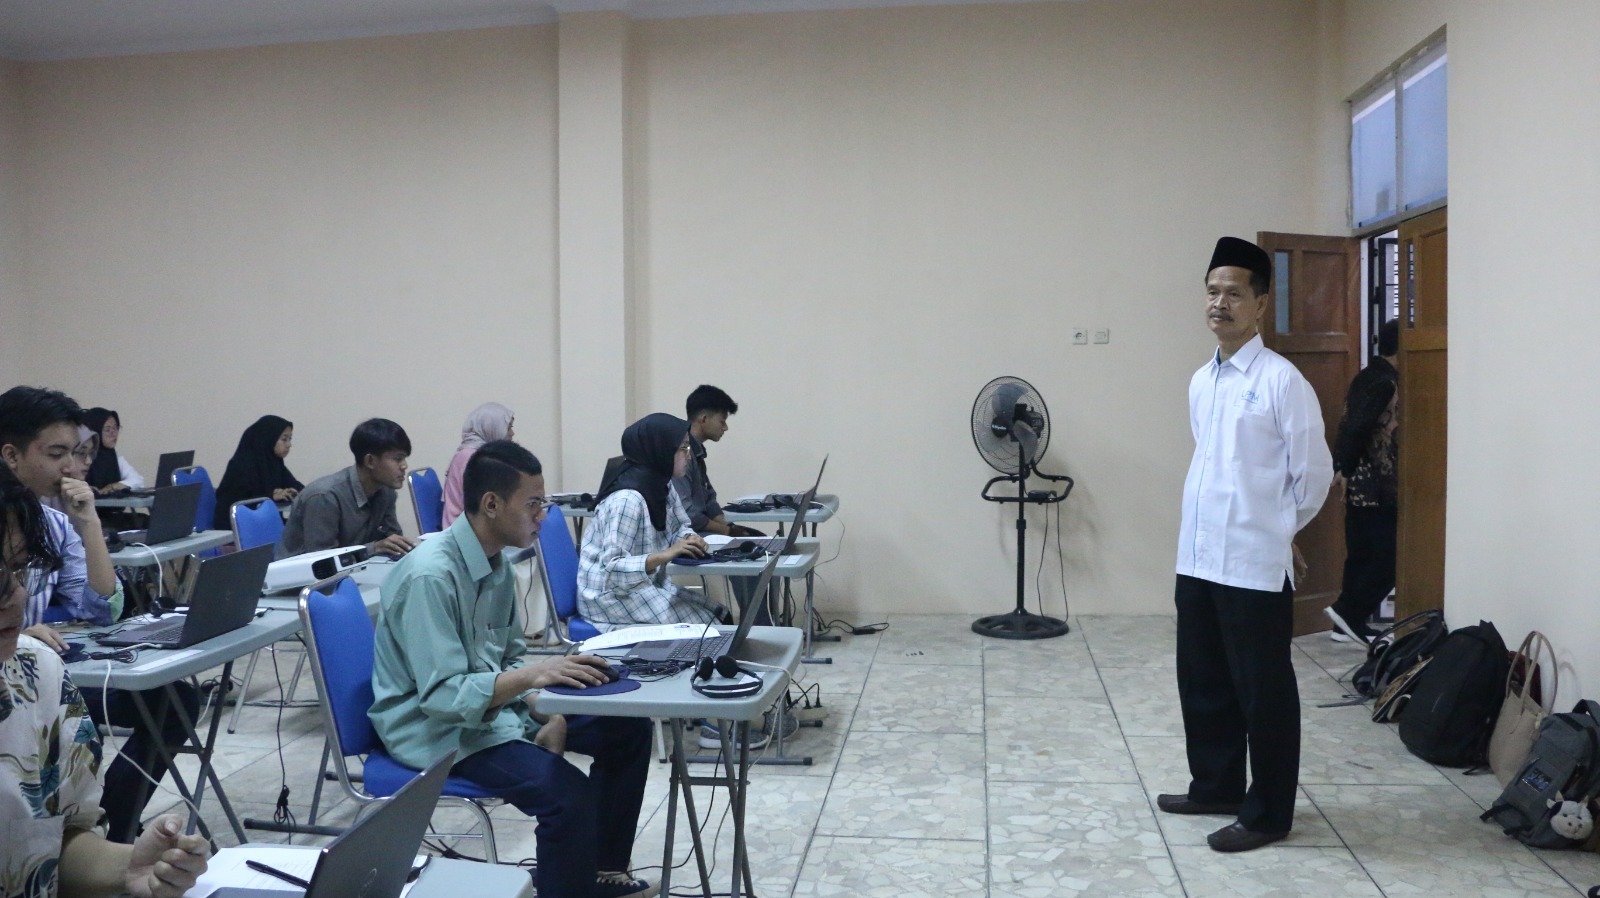 Layanan Akademik UIN Siber Syekh Nurjati Cirebon Gelar Ujian CBT SPMB Mandiri Reguler 2024